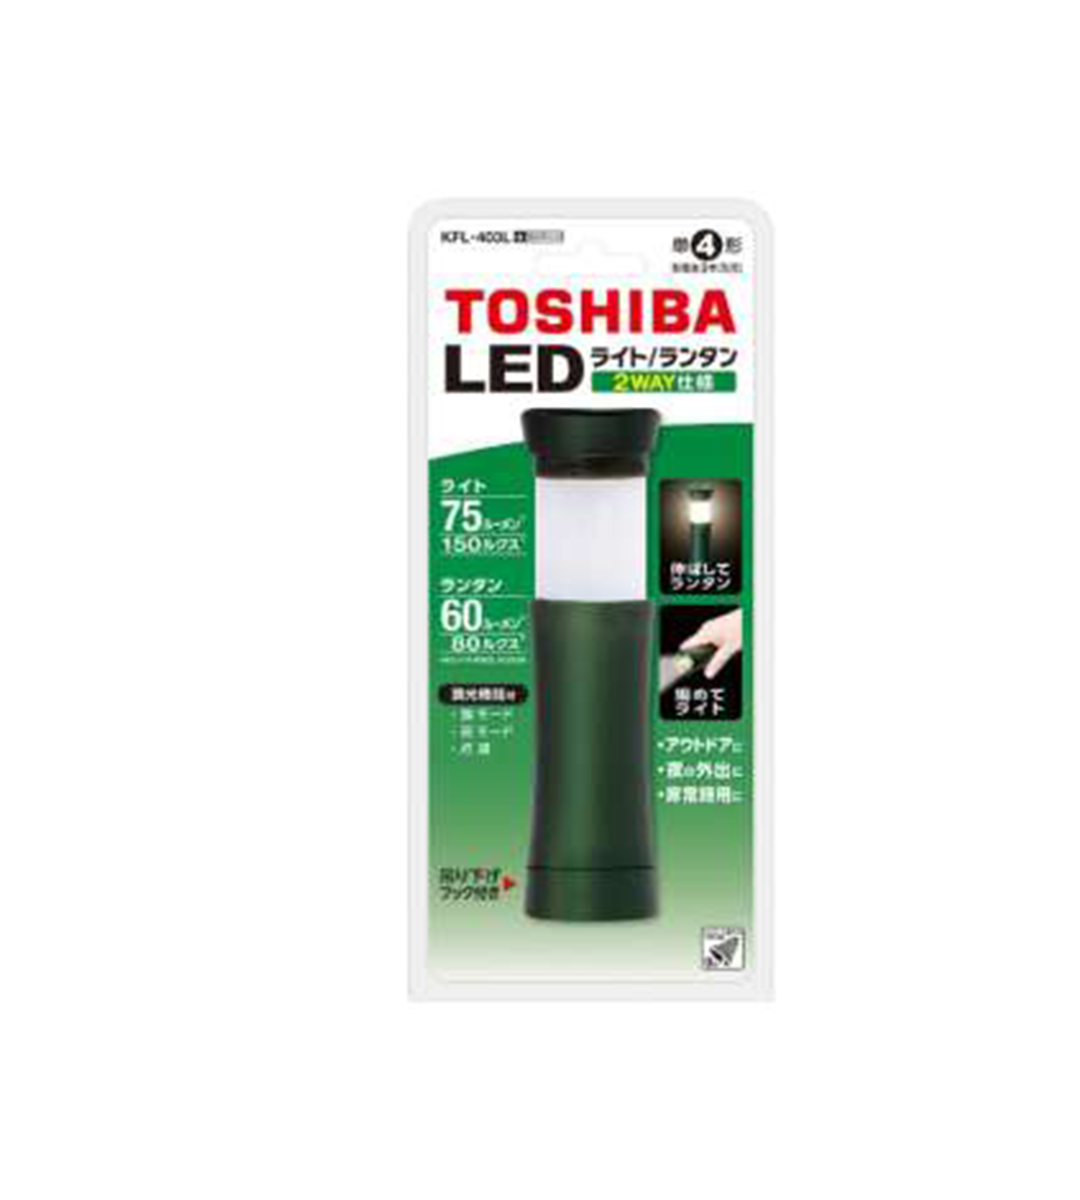 Toshiba Green 2-way Flash & Lantern, KFL-403L(G)